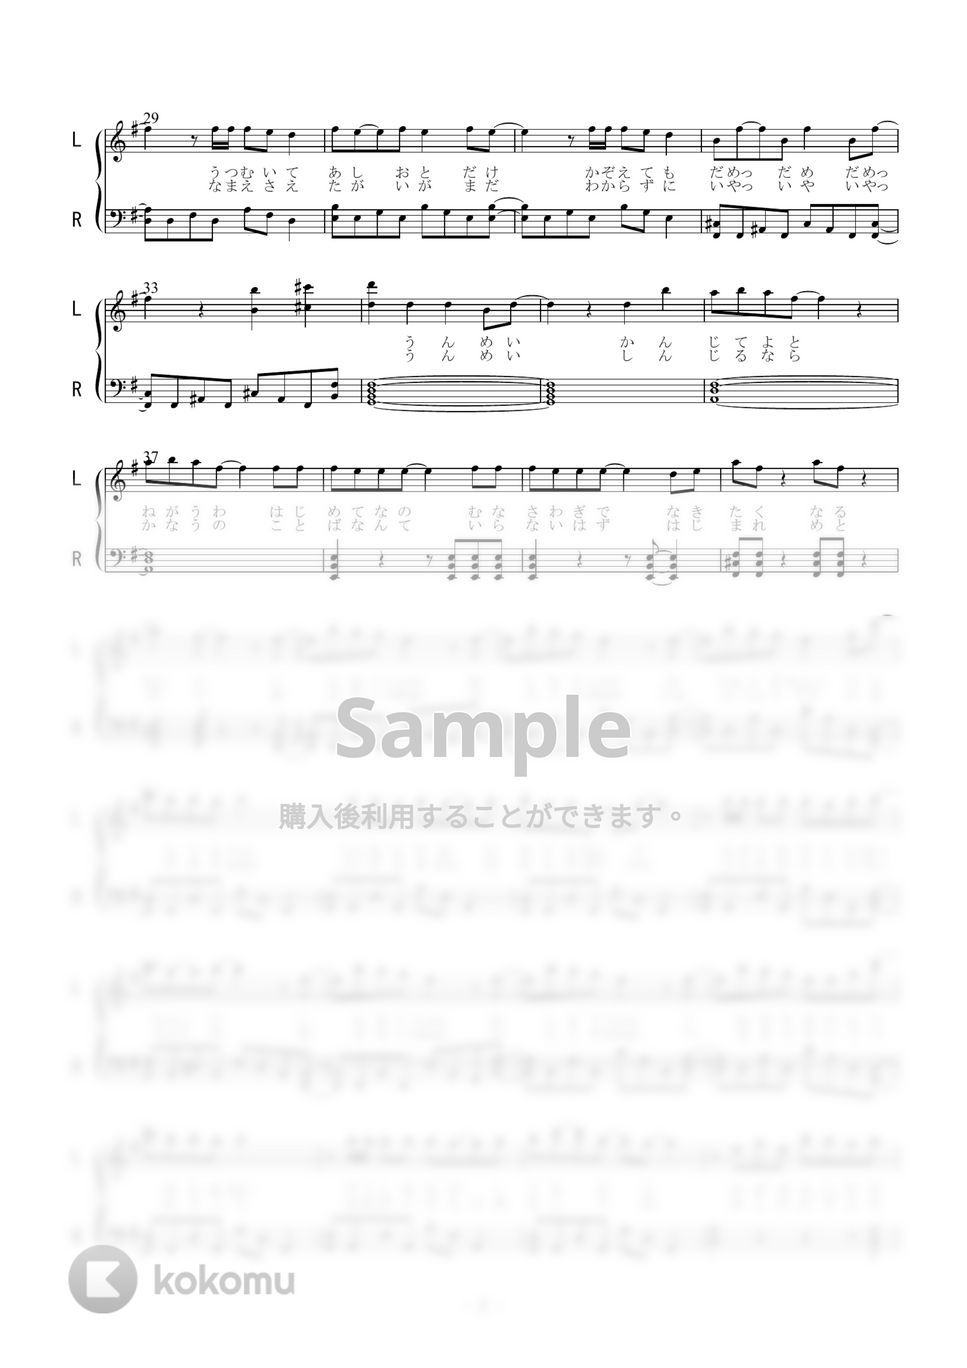 lilly white - 知らないLove*教えてLove (ピアノソロ) by 二次元楽譜製作所